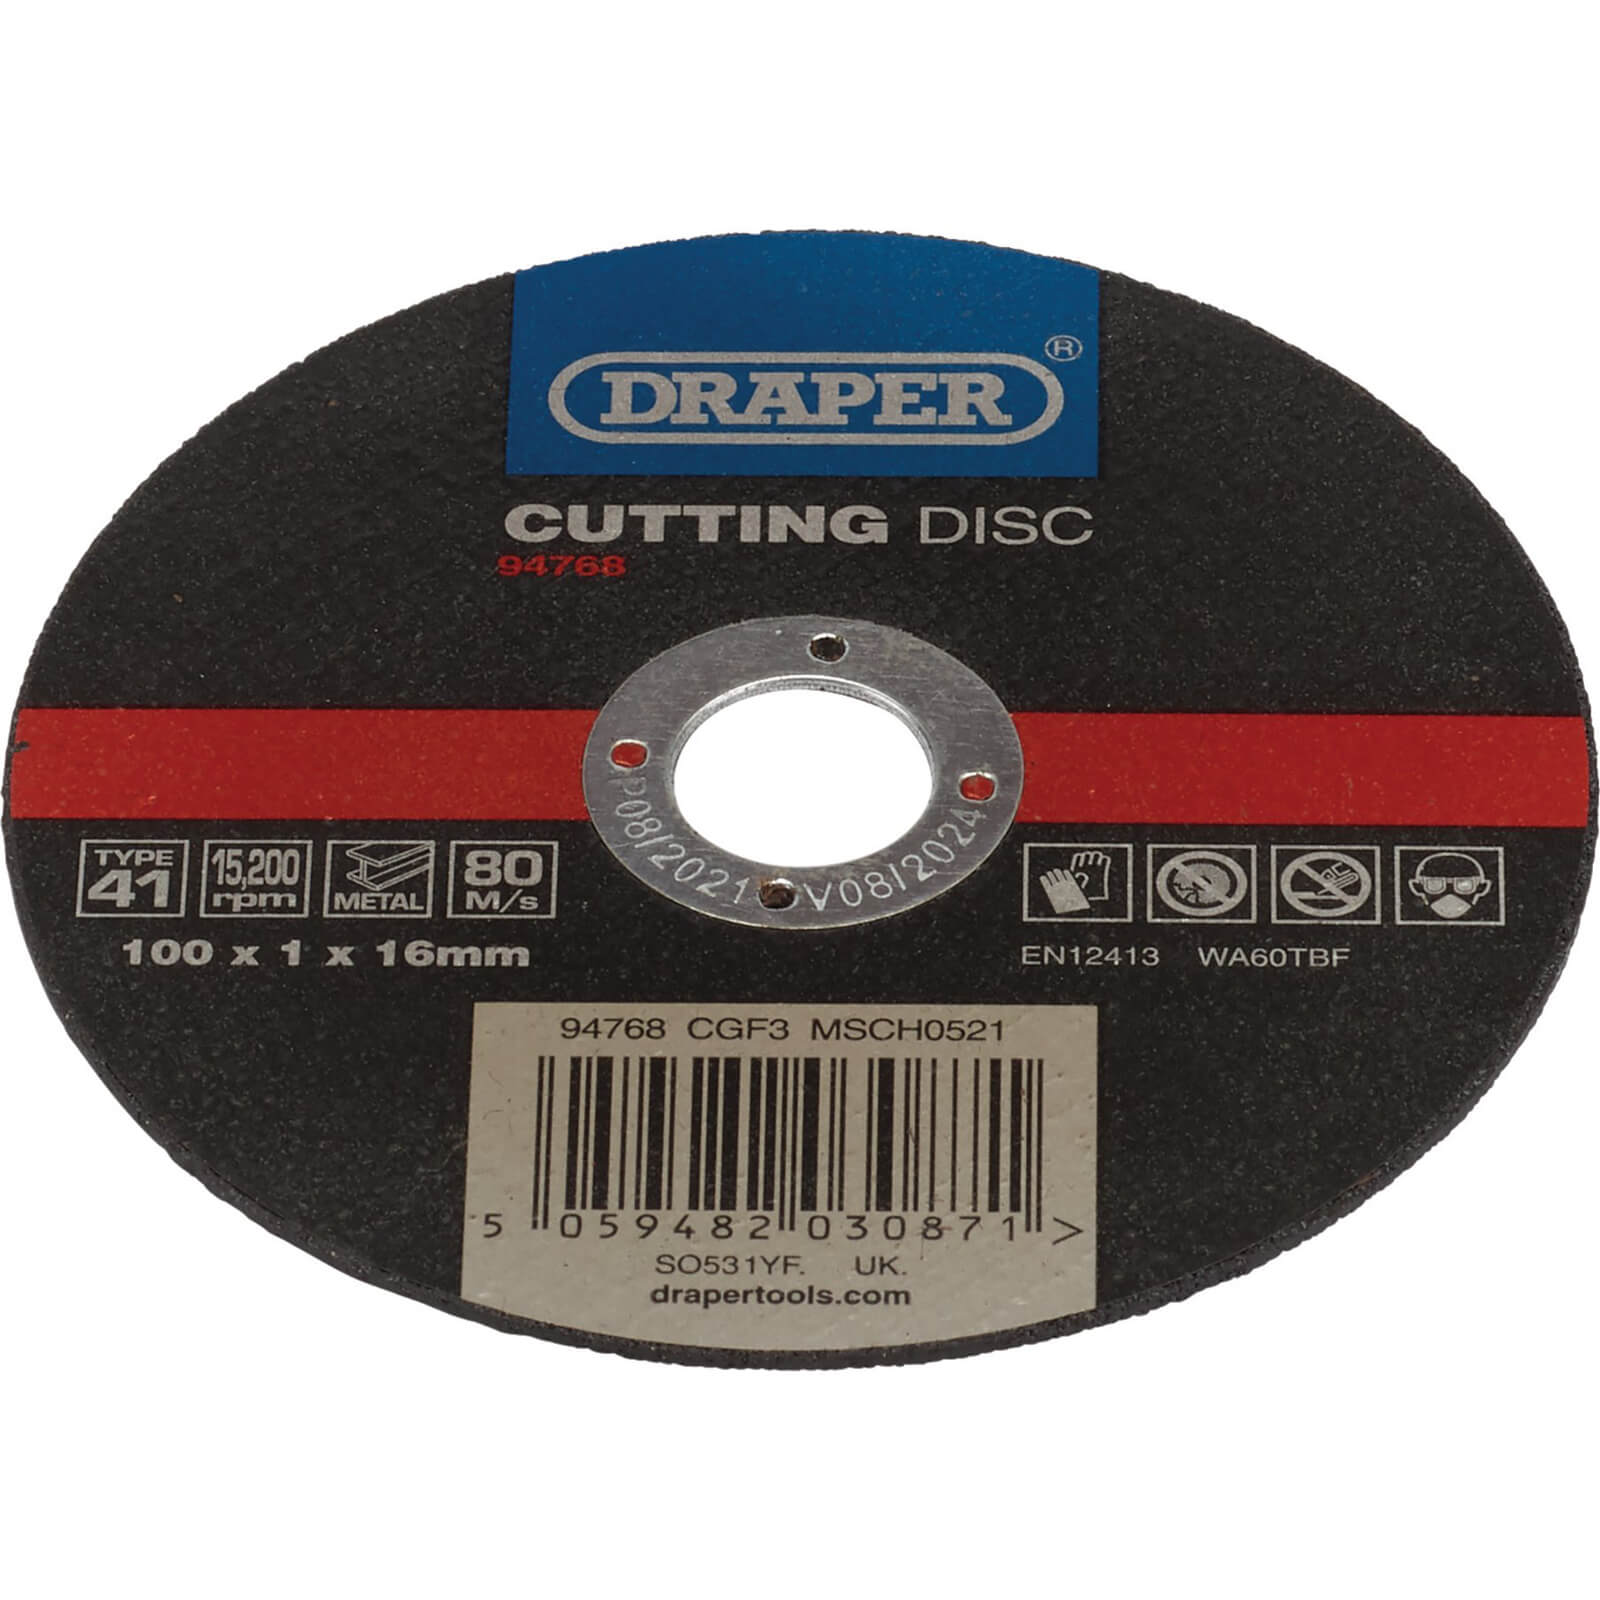 Image of Draper Metal Cutting Disc 100mm 1mm 16mm